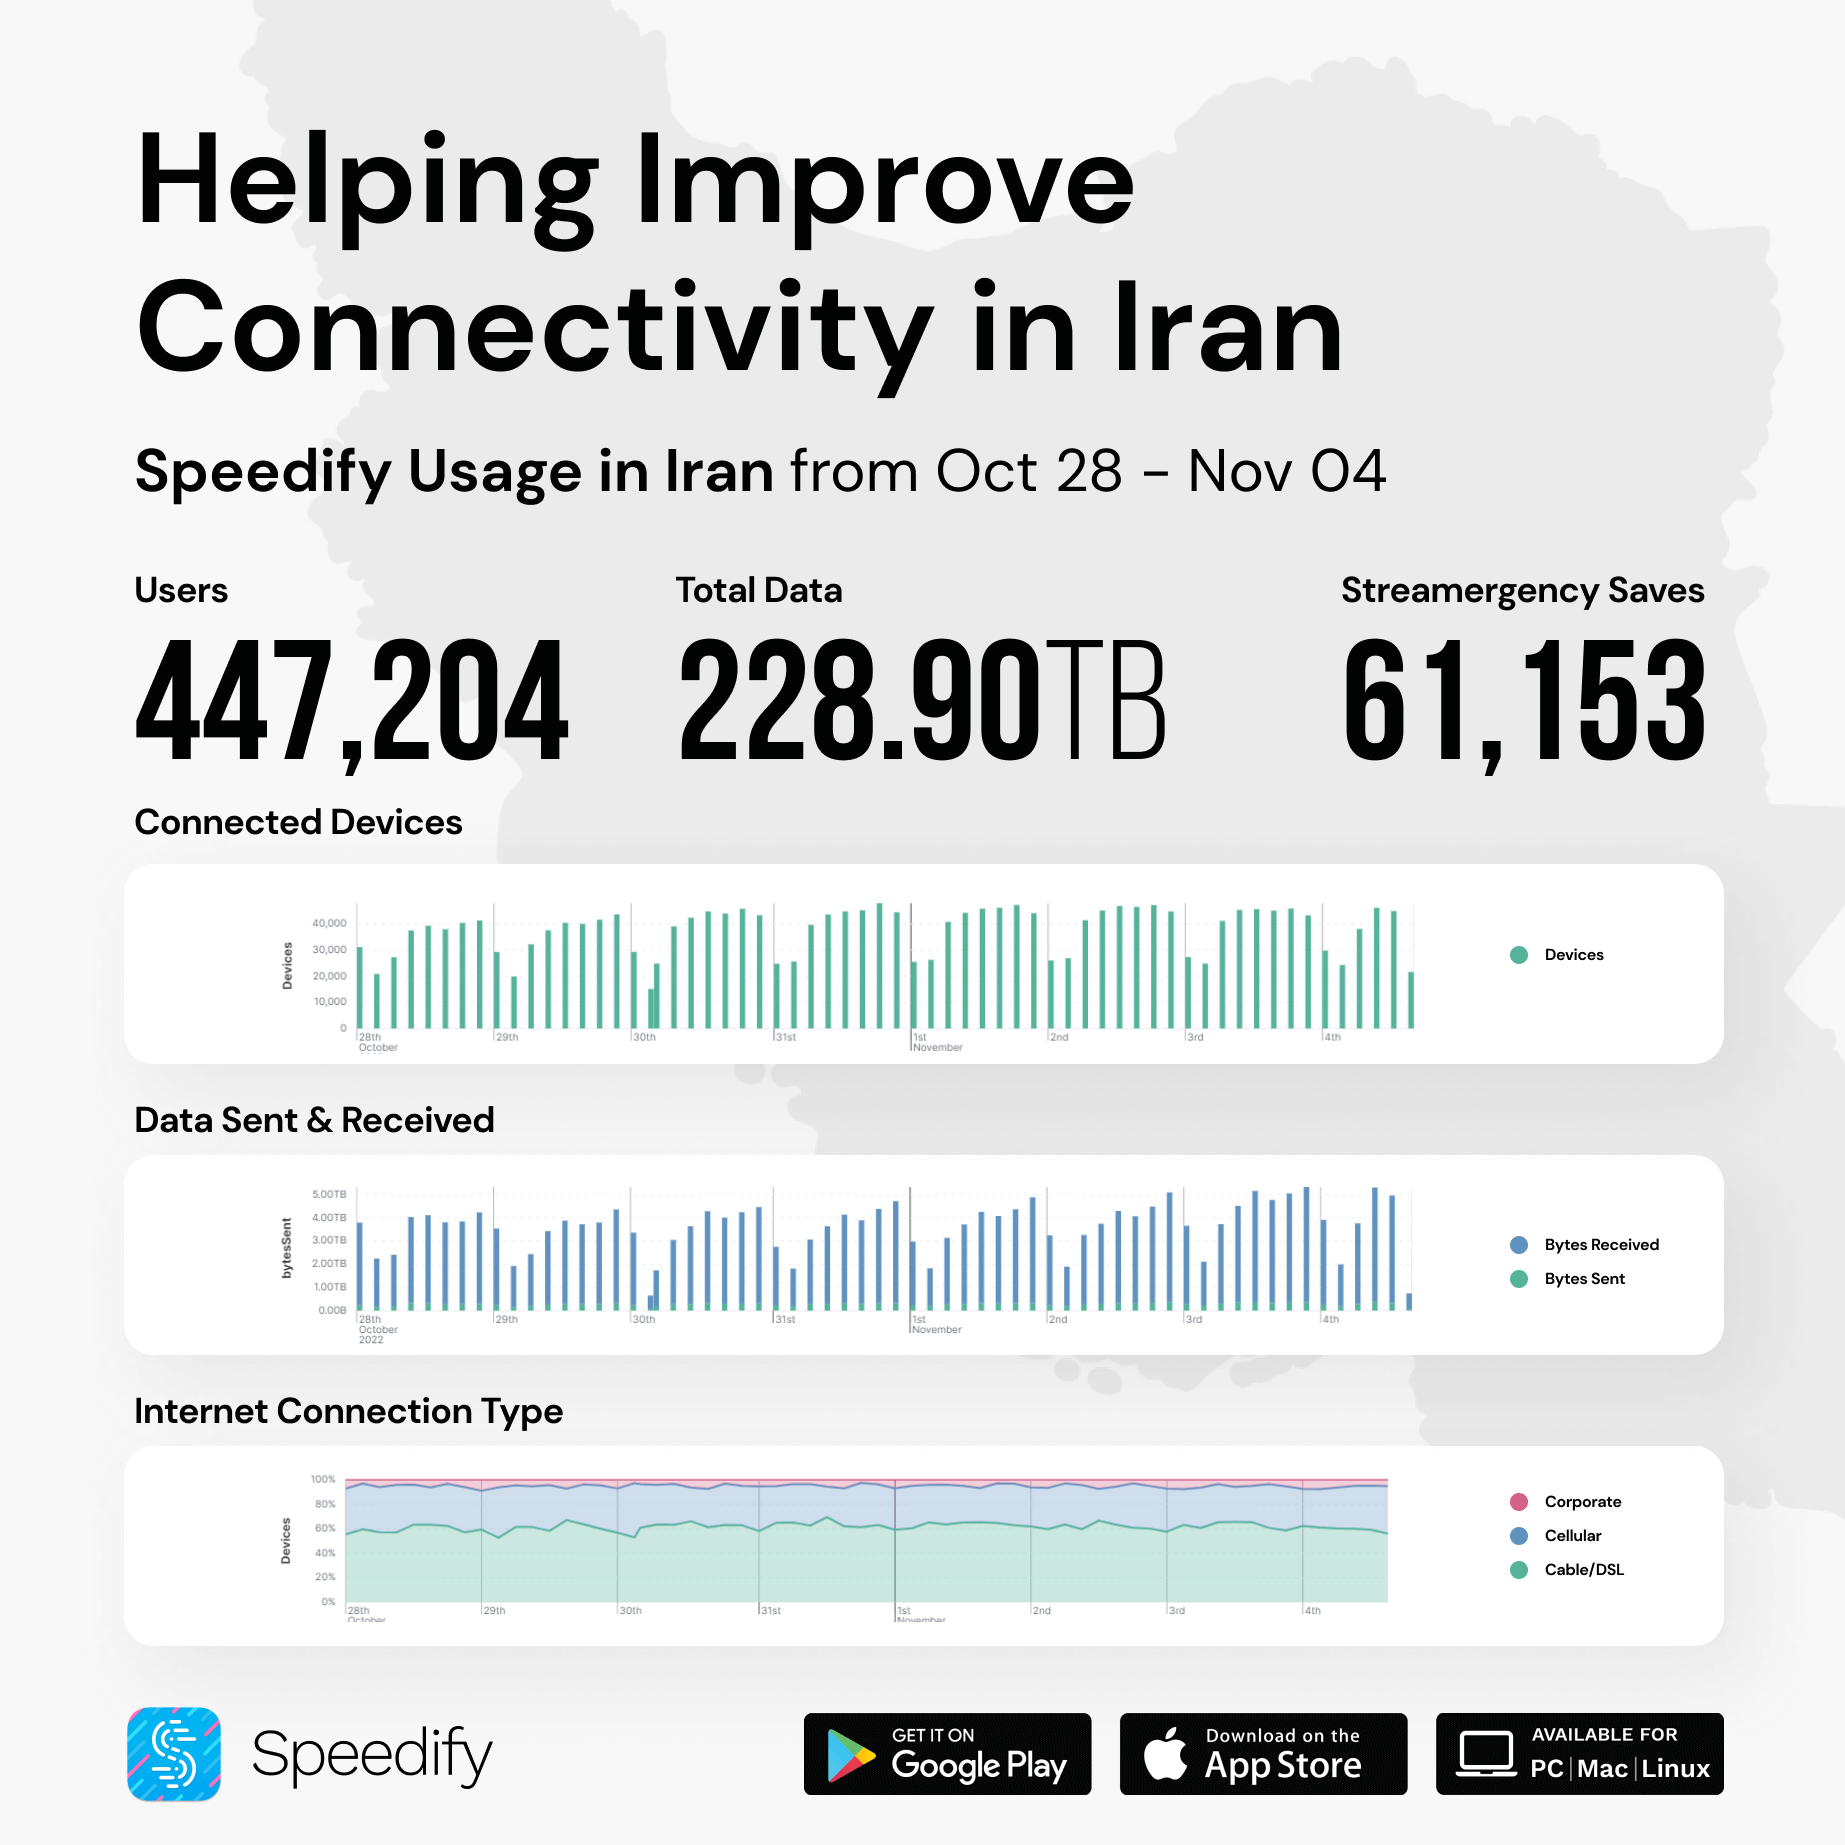 Nov 4 - Iran Internet usage for Speedify users